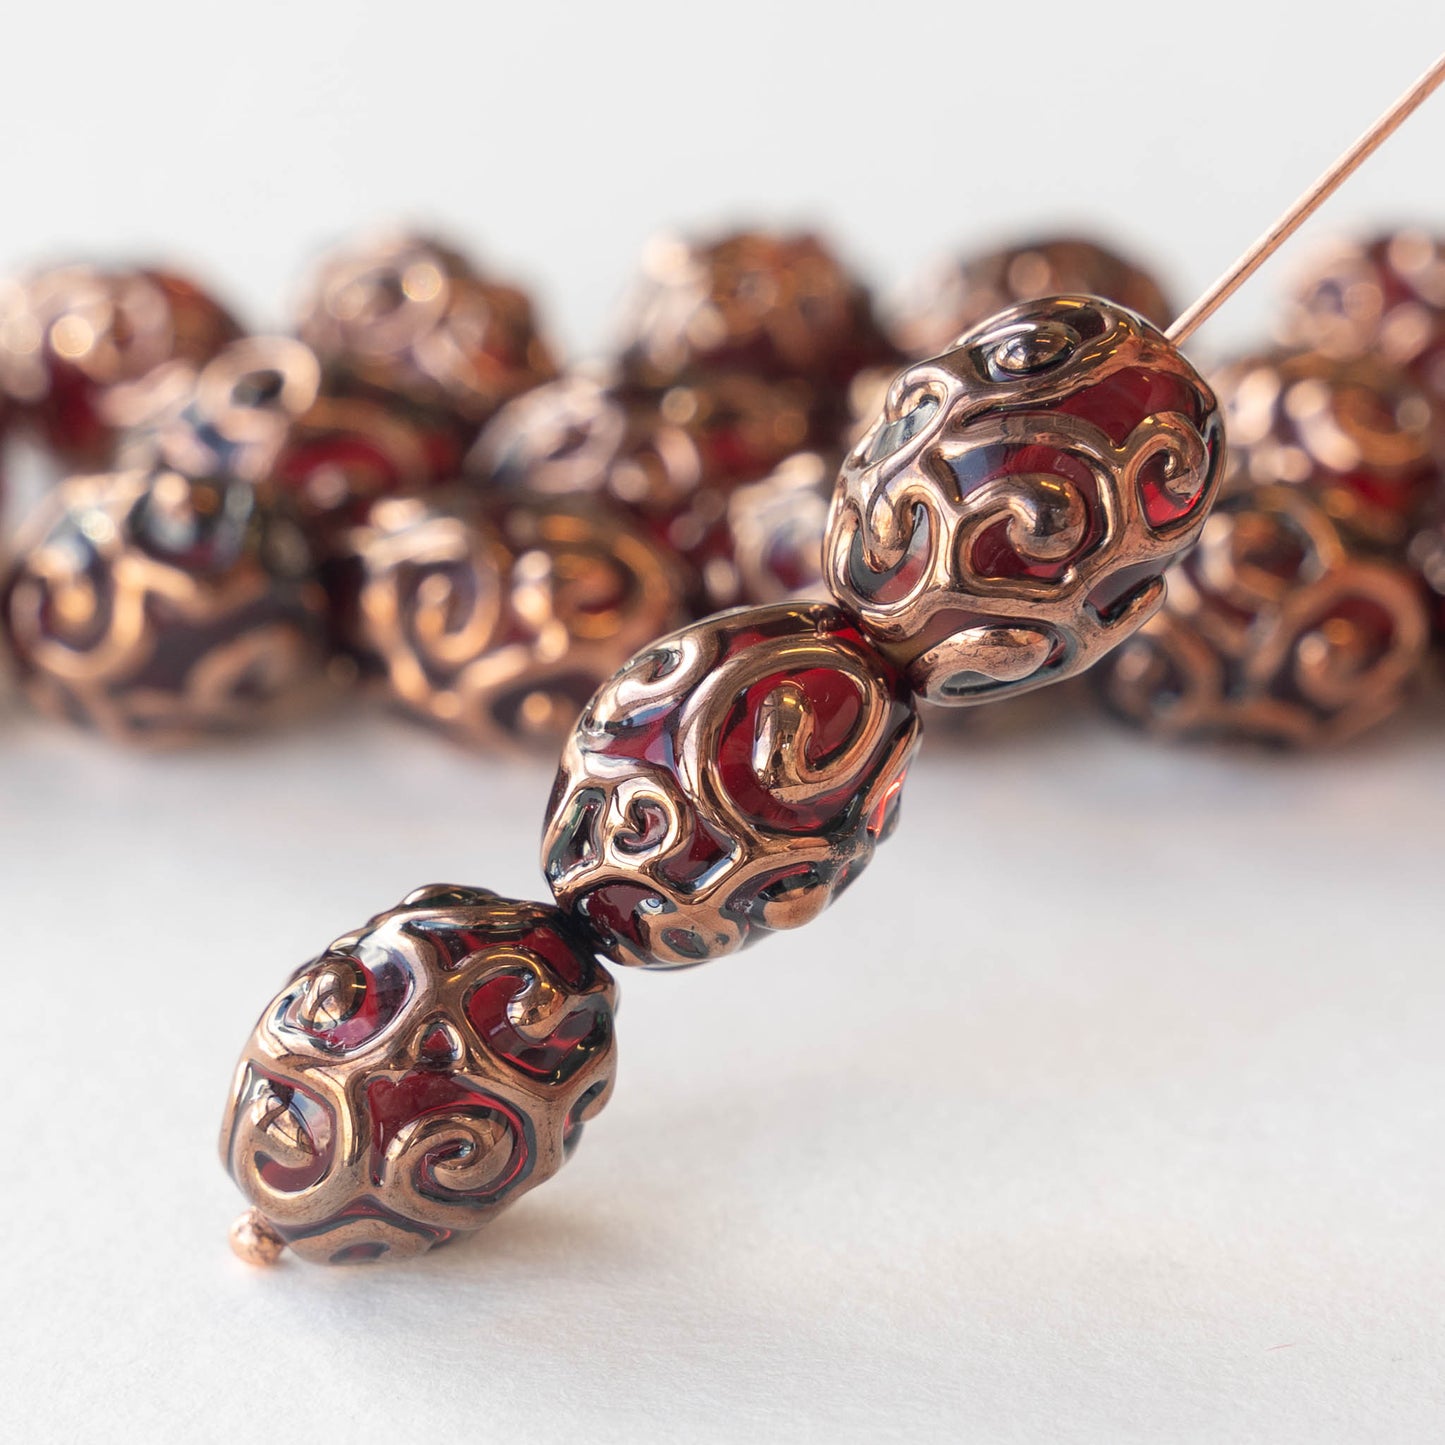 15x10mm Handmade Lampwork Beads - Red - 2, 6 or 12